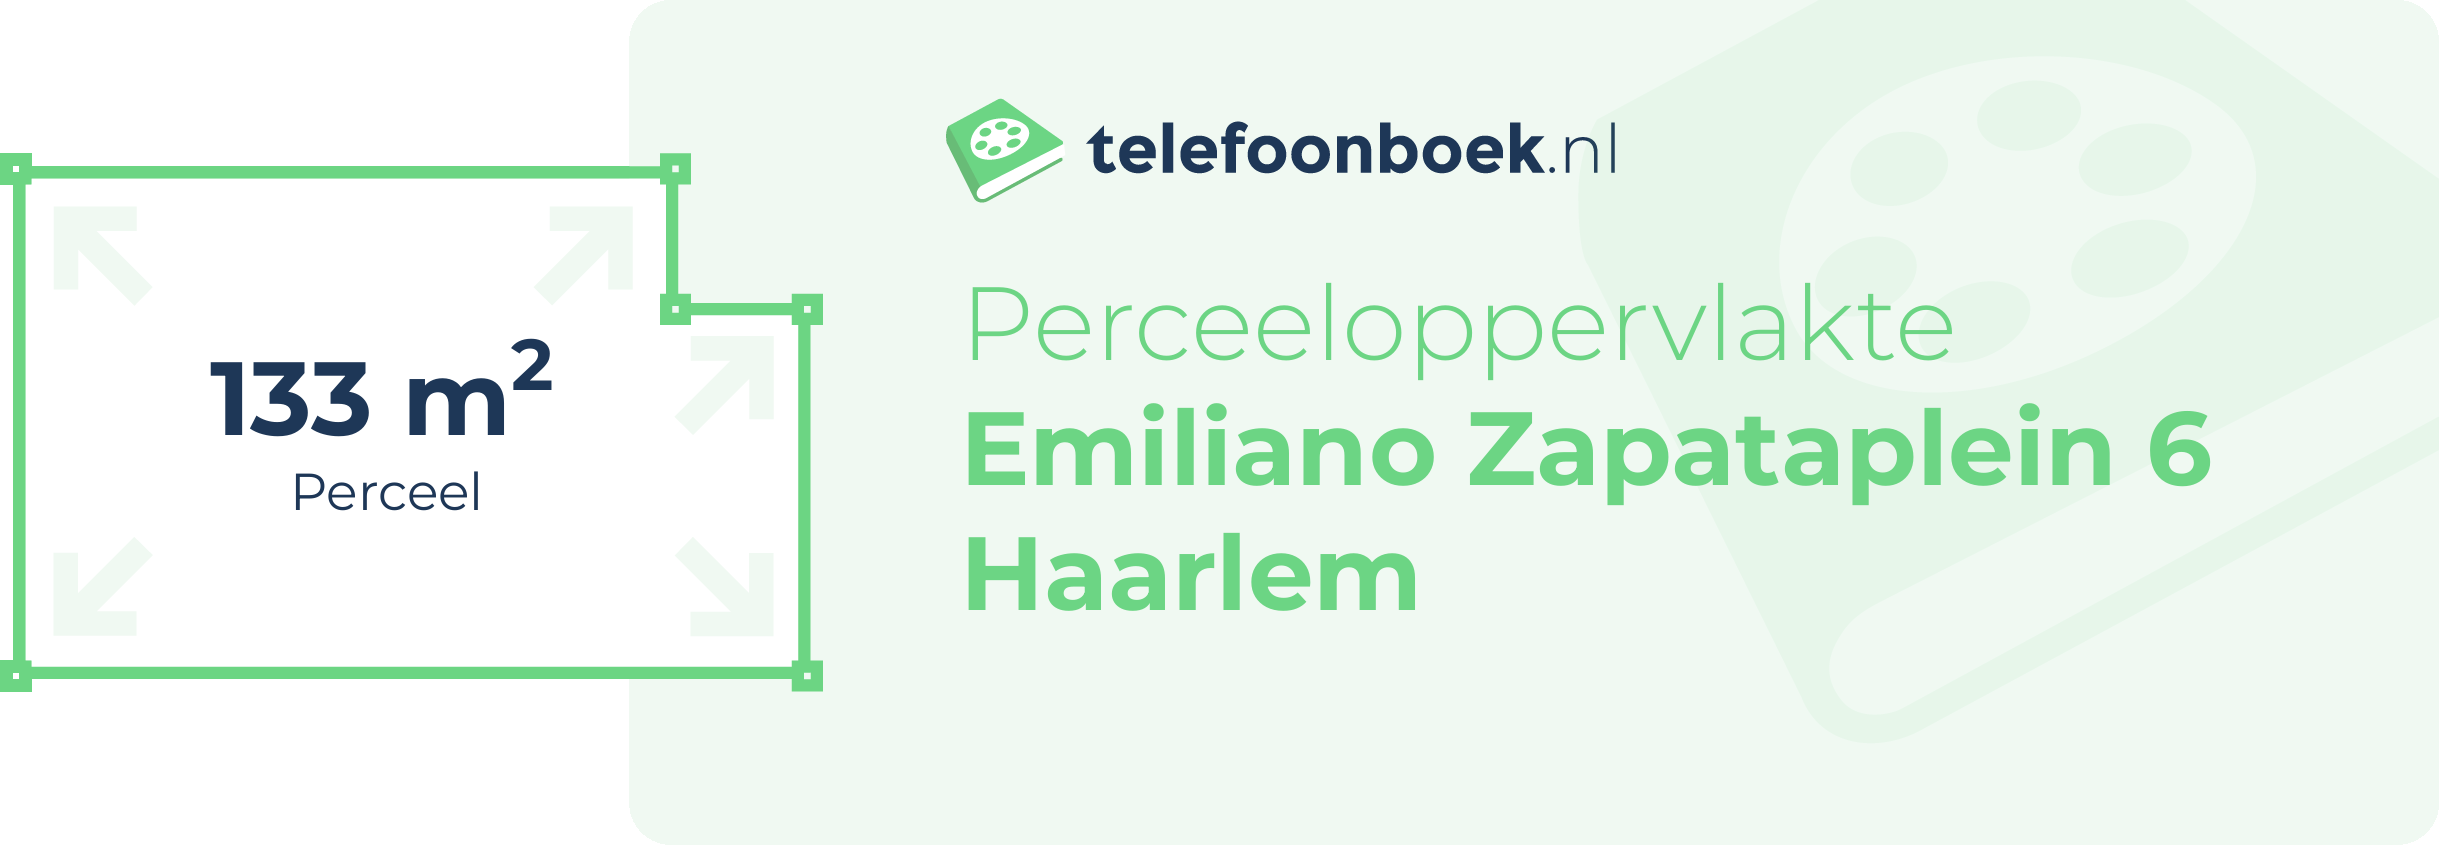 Perceeloppervlakte Emiliano Zapataplein 6 Haarlem